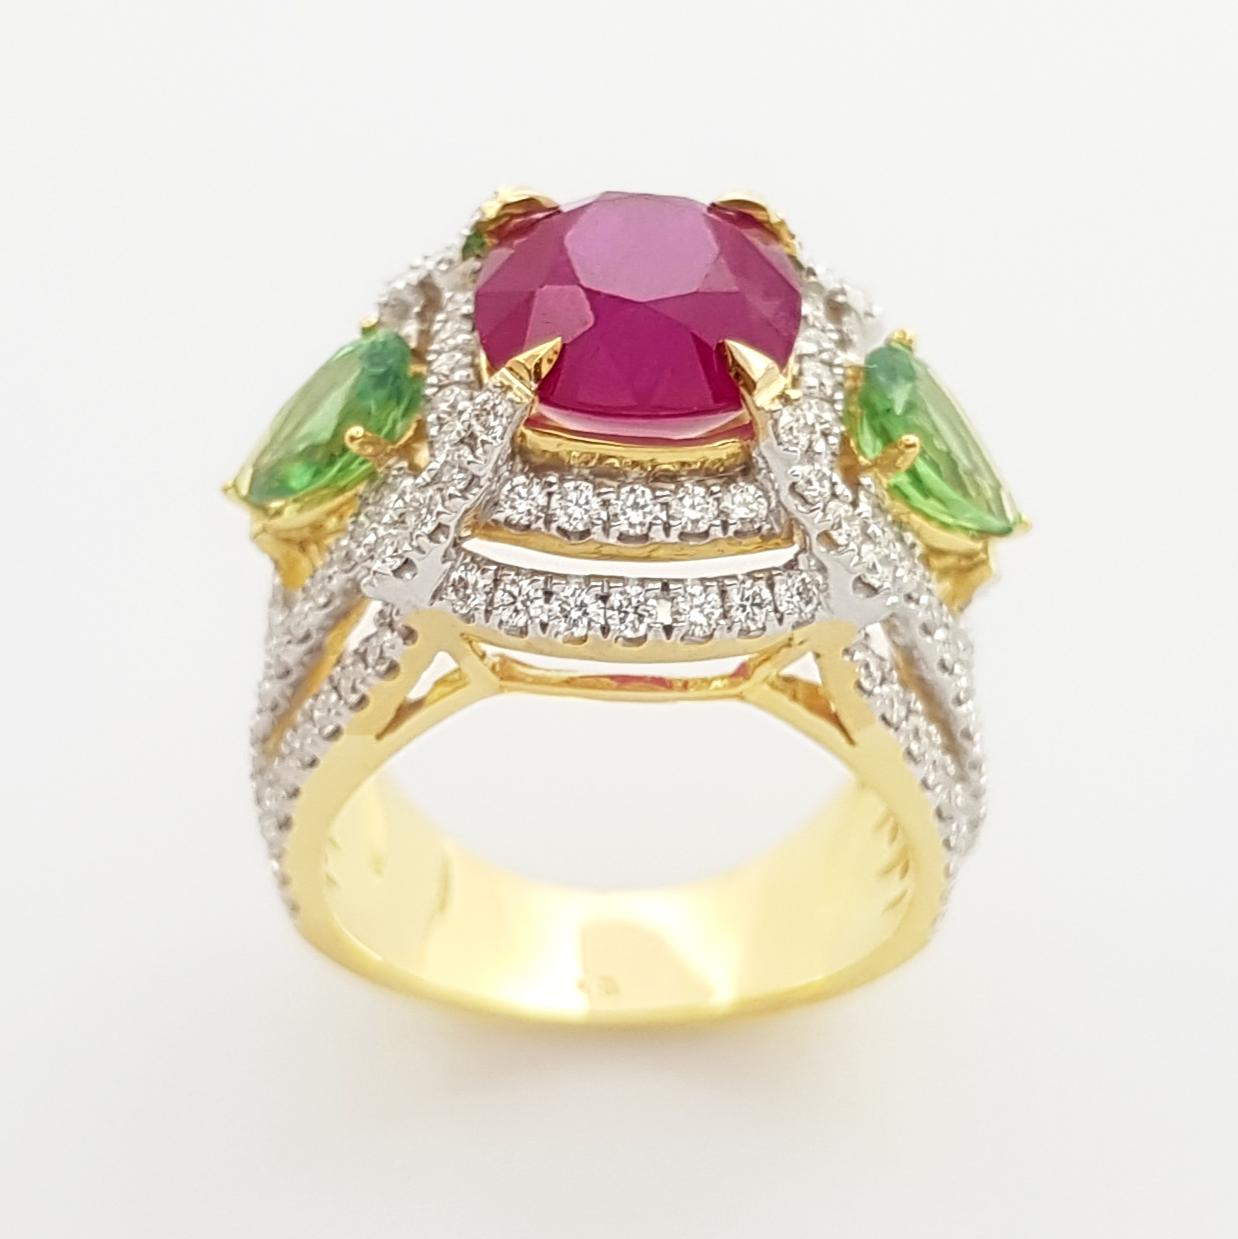 Ruby, Tsavorite and Diamond Ring Set in 18k Gold Settings For Sale 3